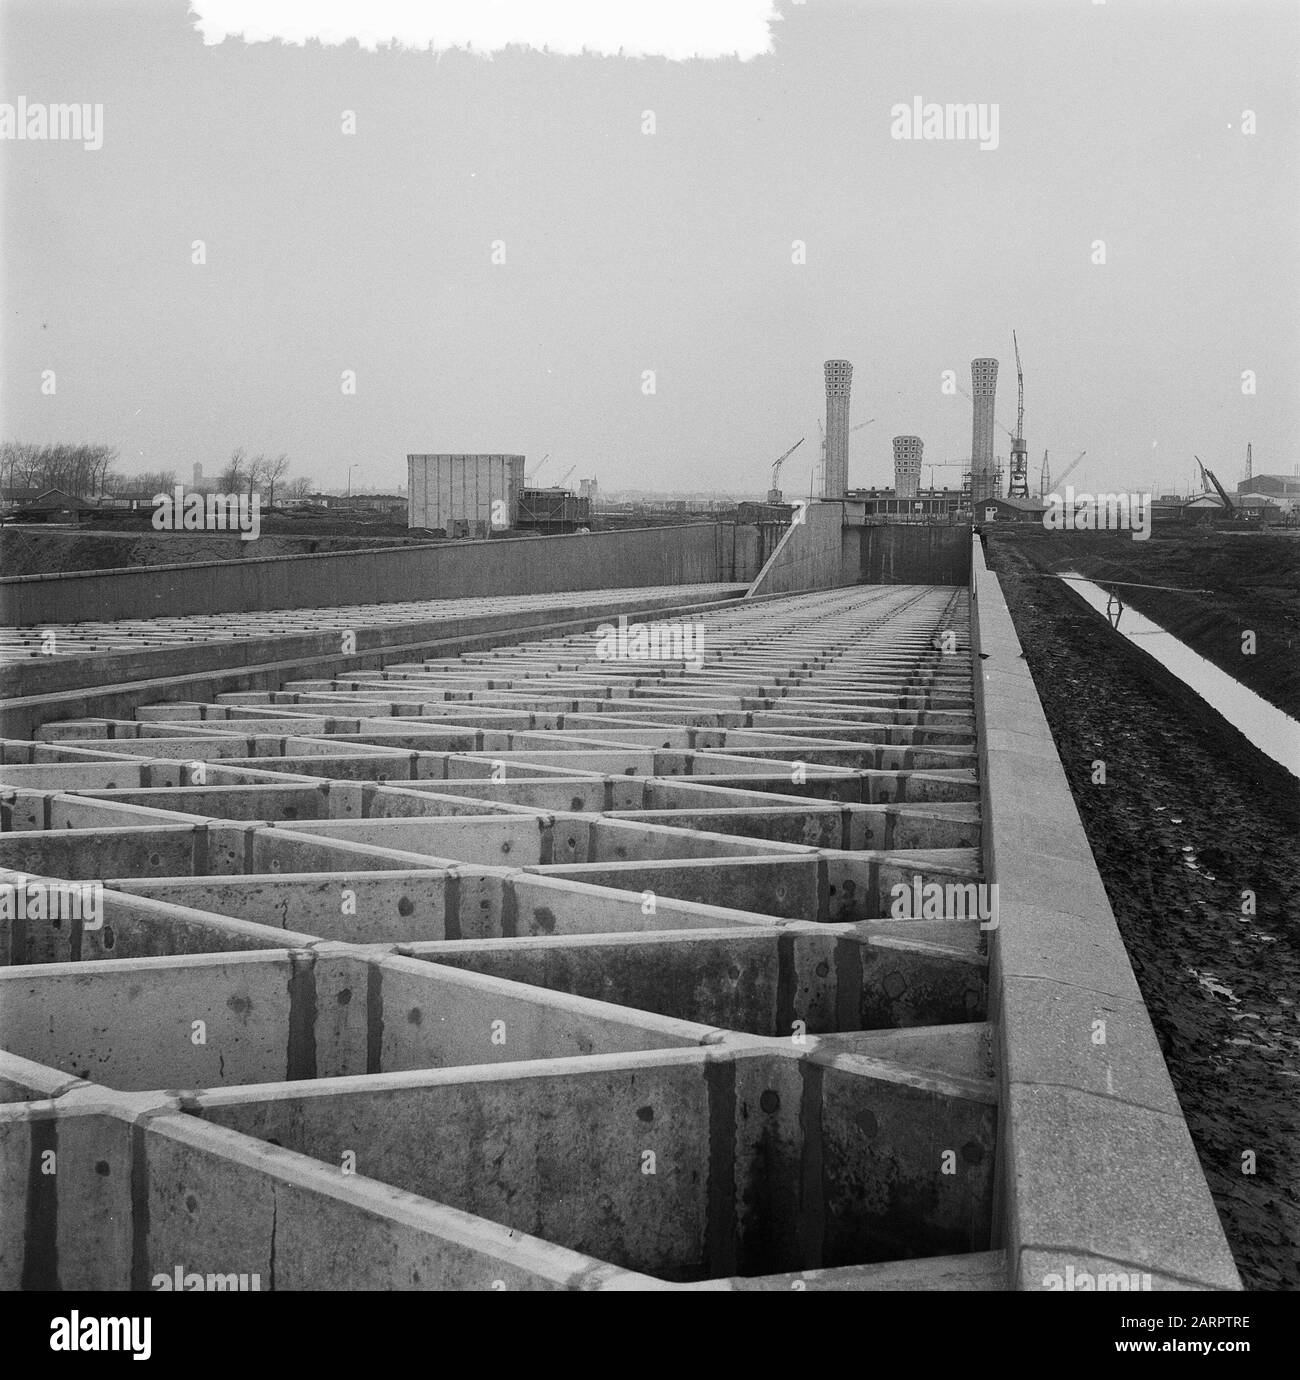 Tunnelbouw Velsen-Noord Datum: 26. Februar 1957 Standort: Velsen Schlüsselwörter: Bauaktivitäten, Tunnel Stockfoto